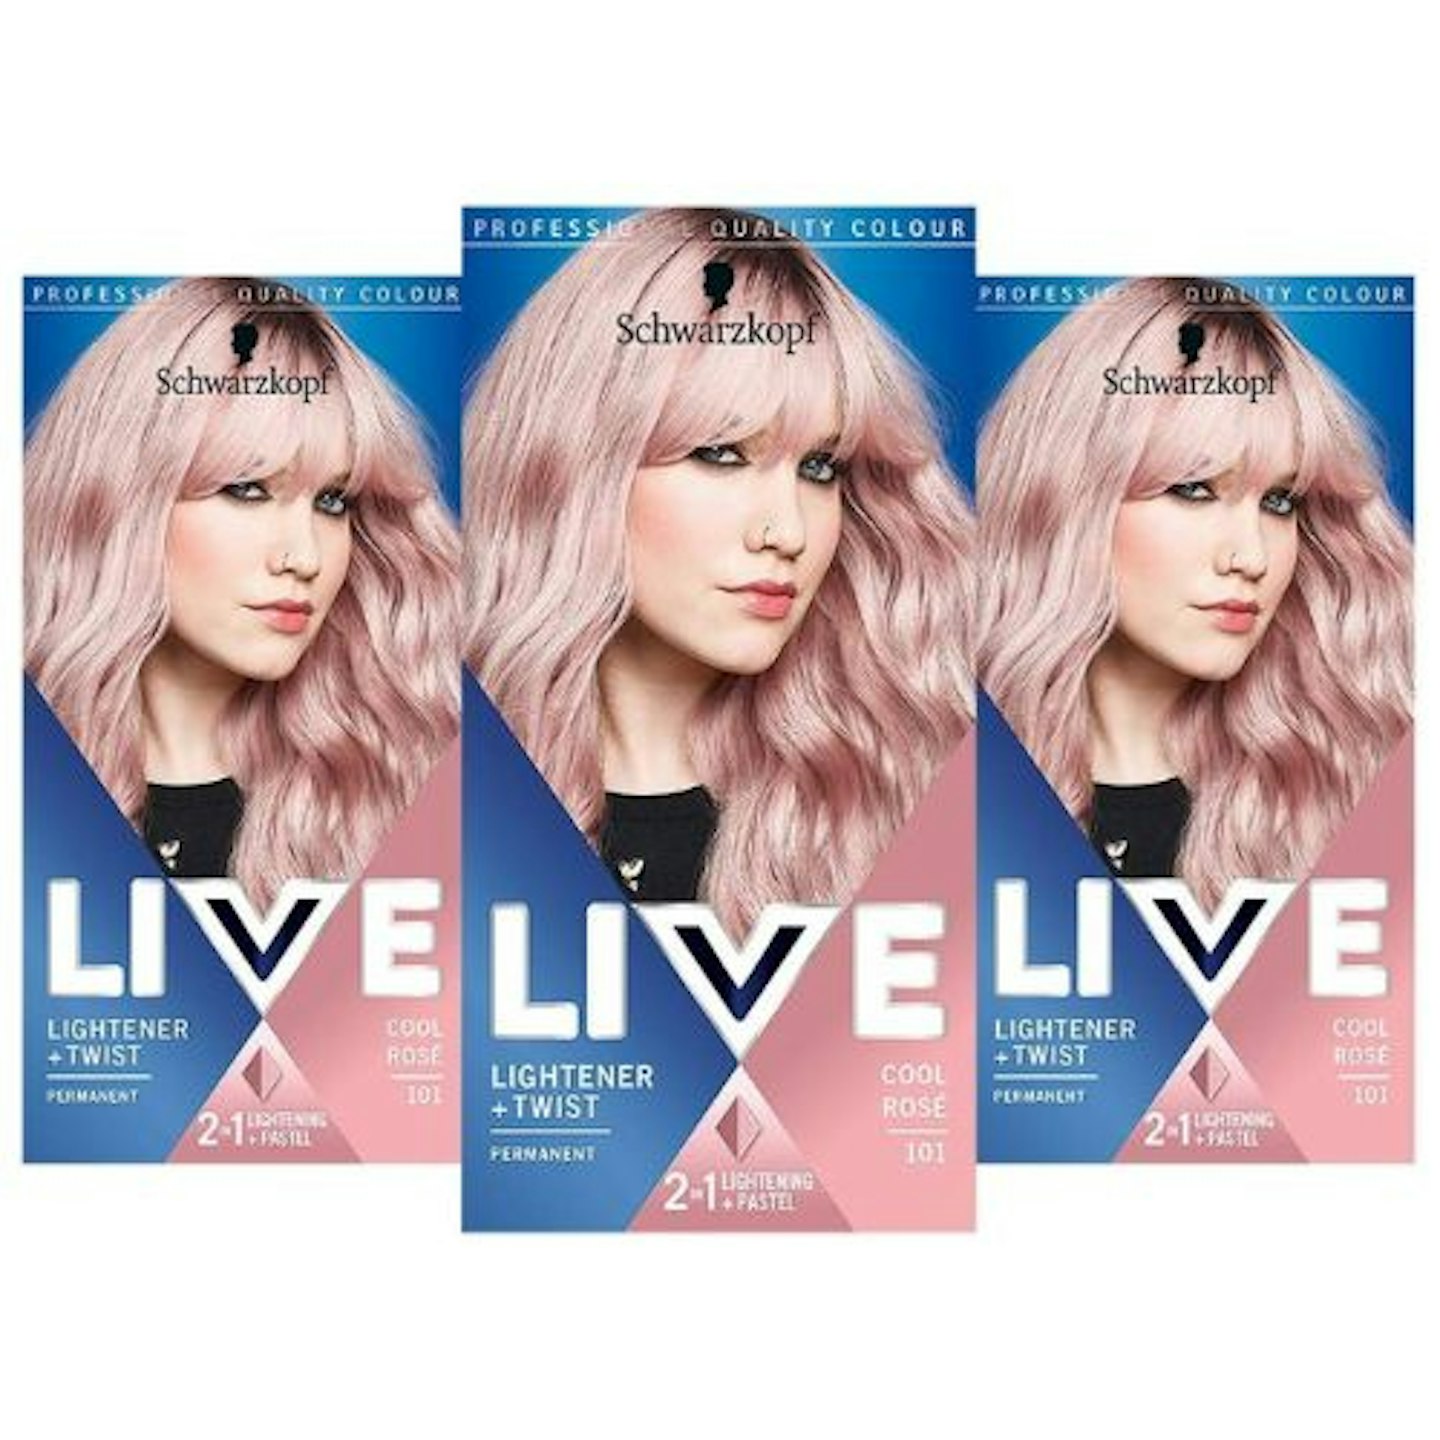 Schwarzkopf Live Lightener + Twist Hair Dye, Cool Rose